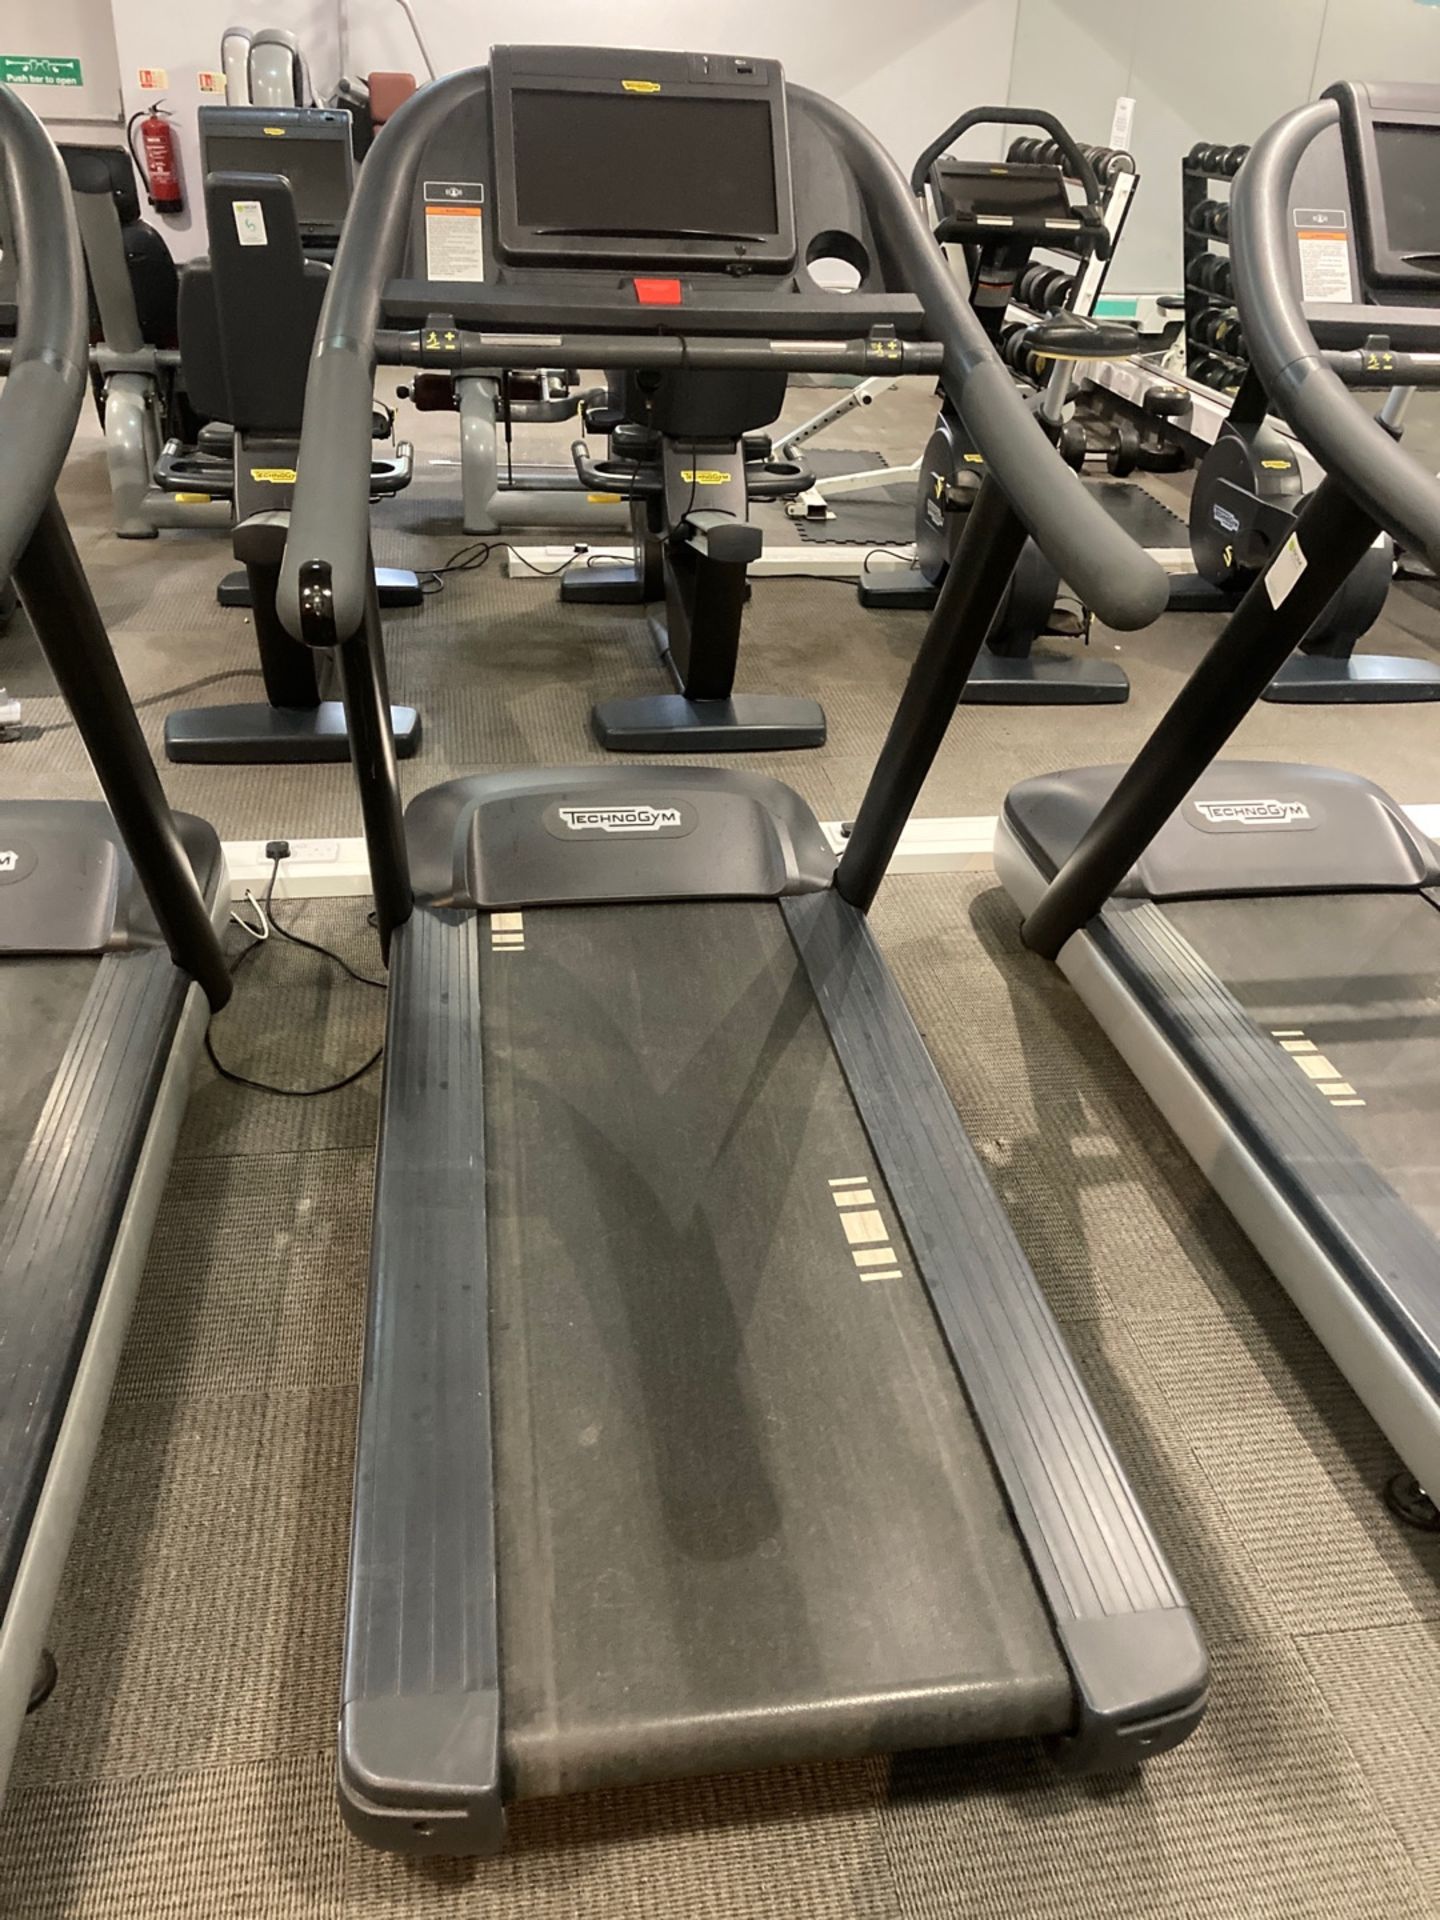 Techno Gym Fitness Treadmill